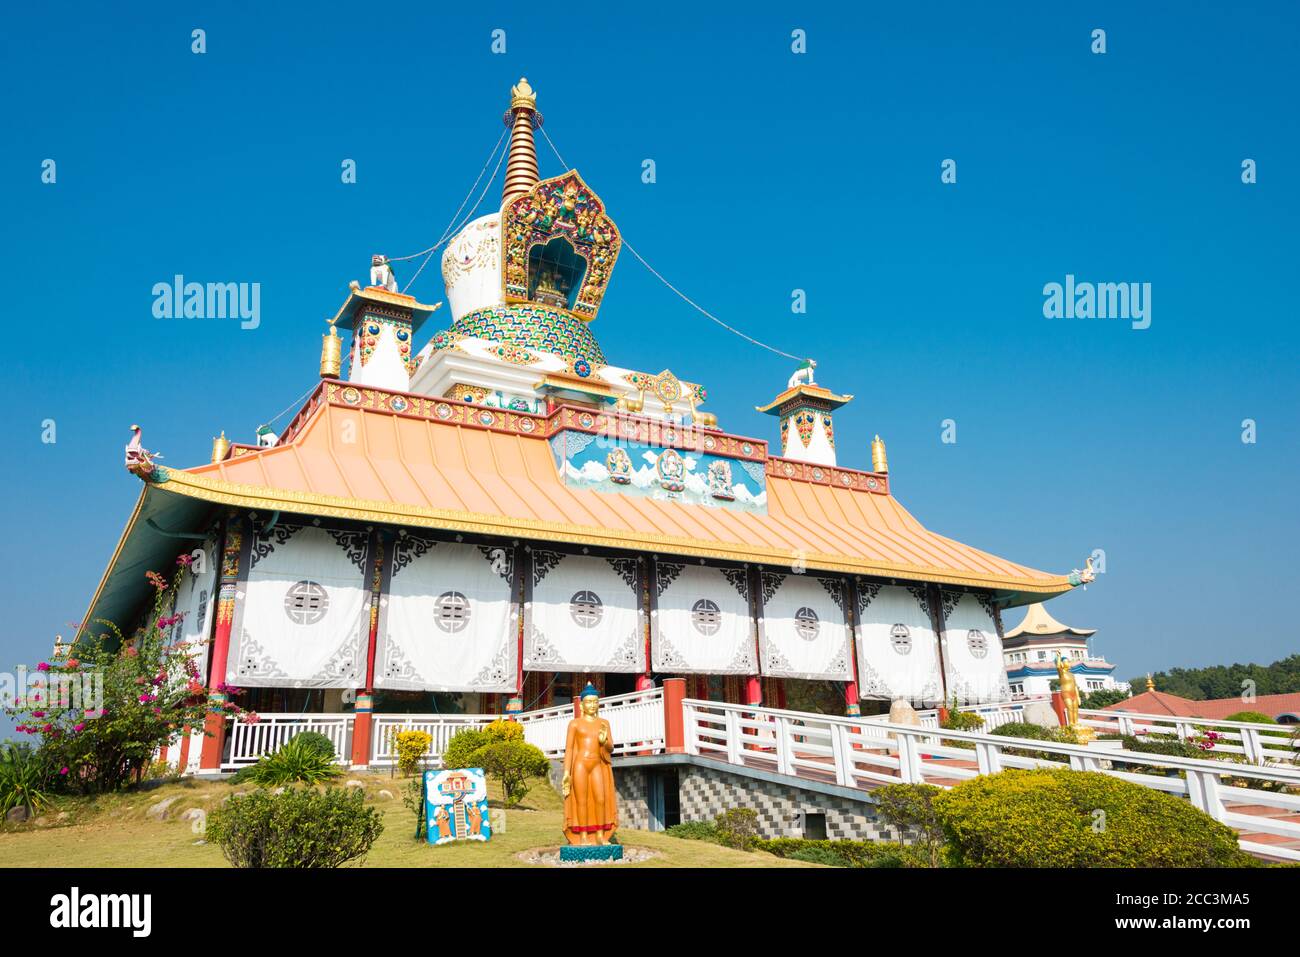 Lumbini, Nepal - The Great Drigung Kagyud Lotus Stupa (German Temple) in Lumbini, Nepal. Stock Photo